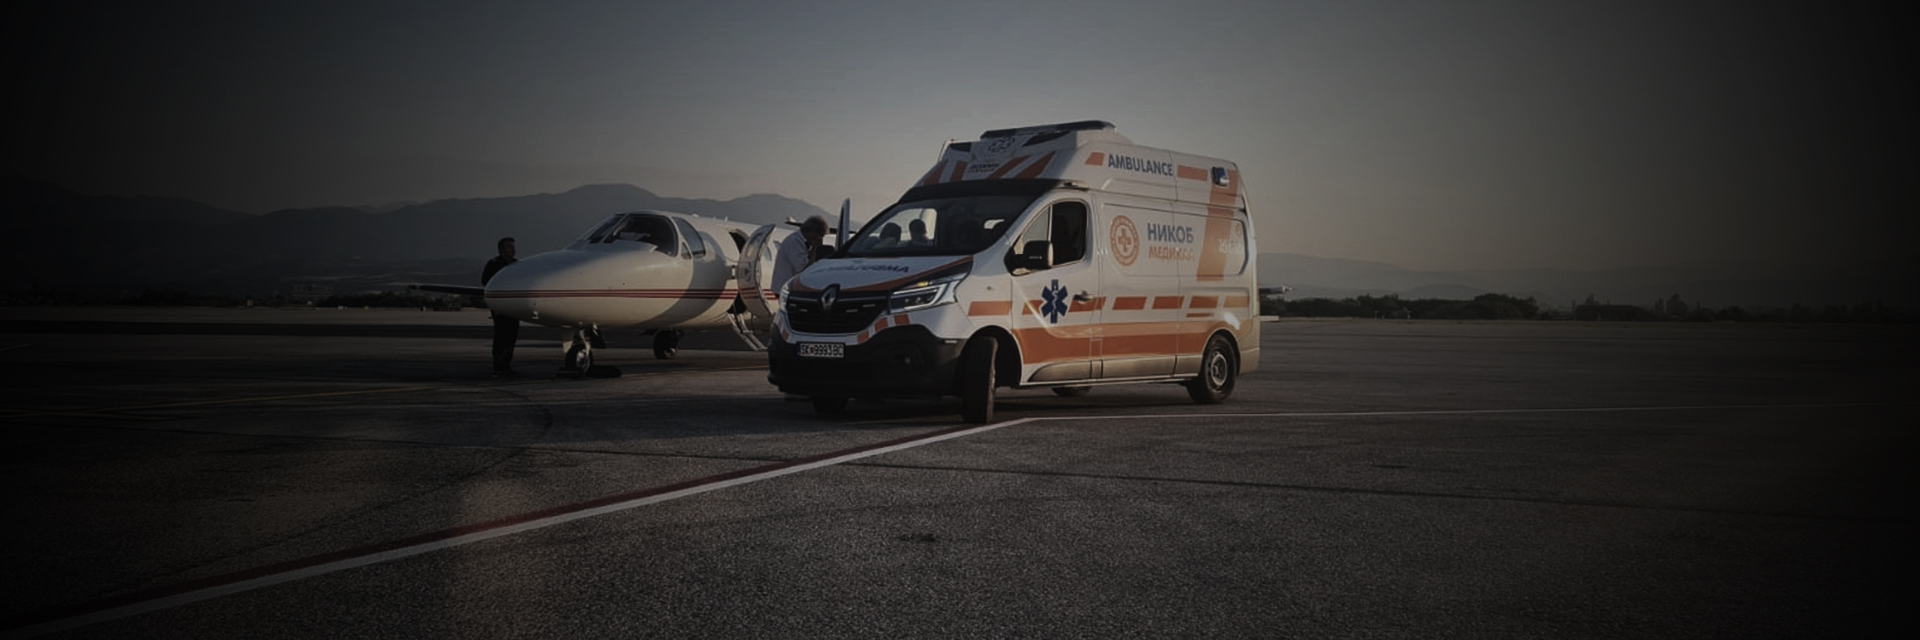 istanbul hava ambulansı